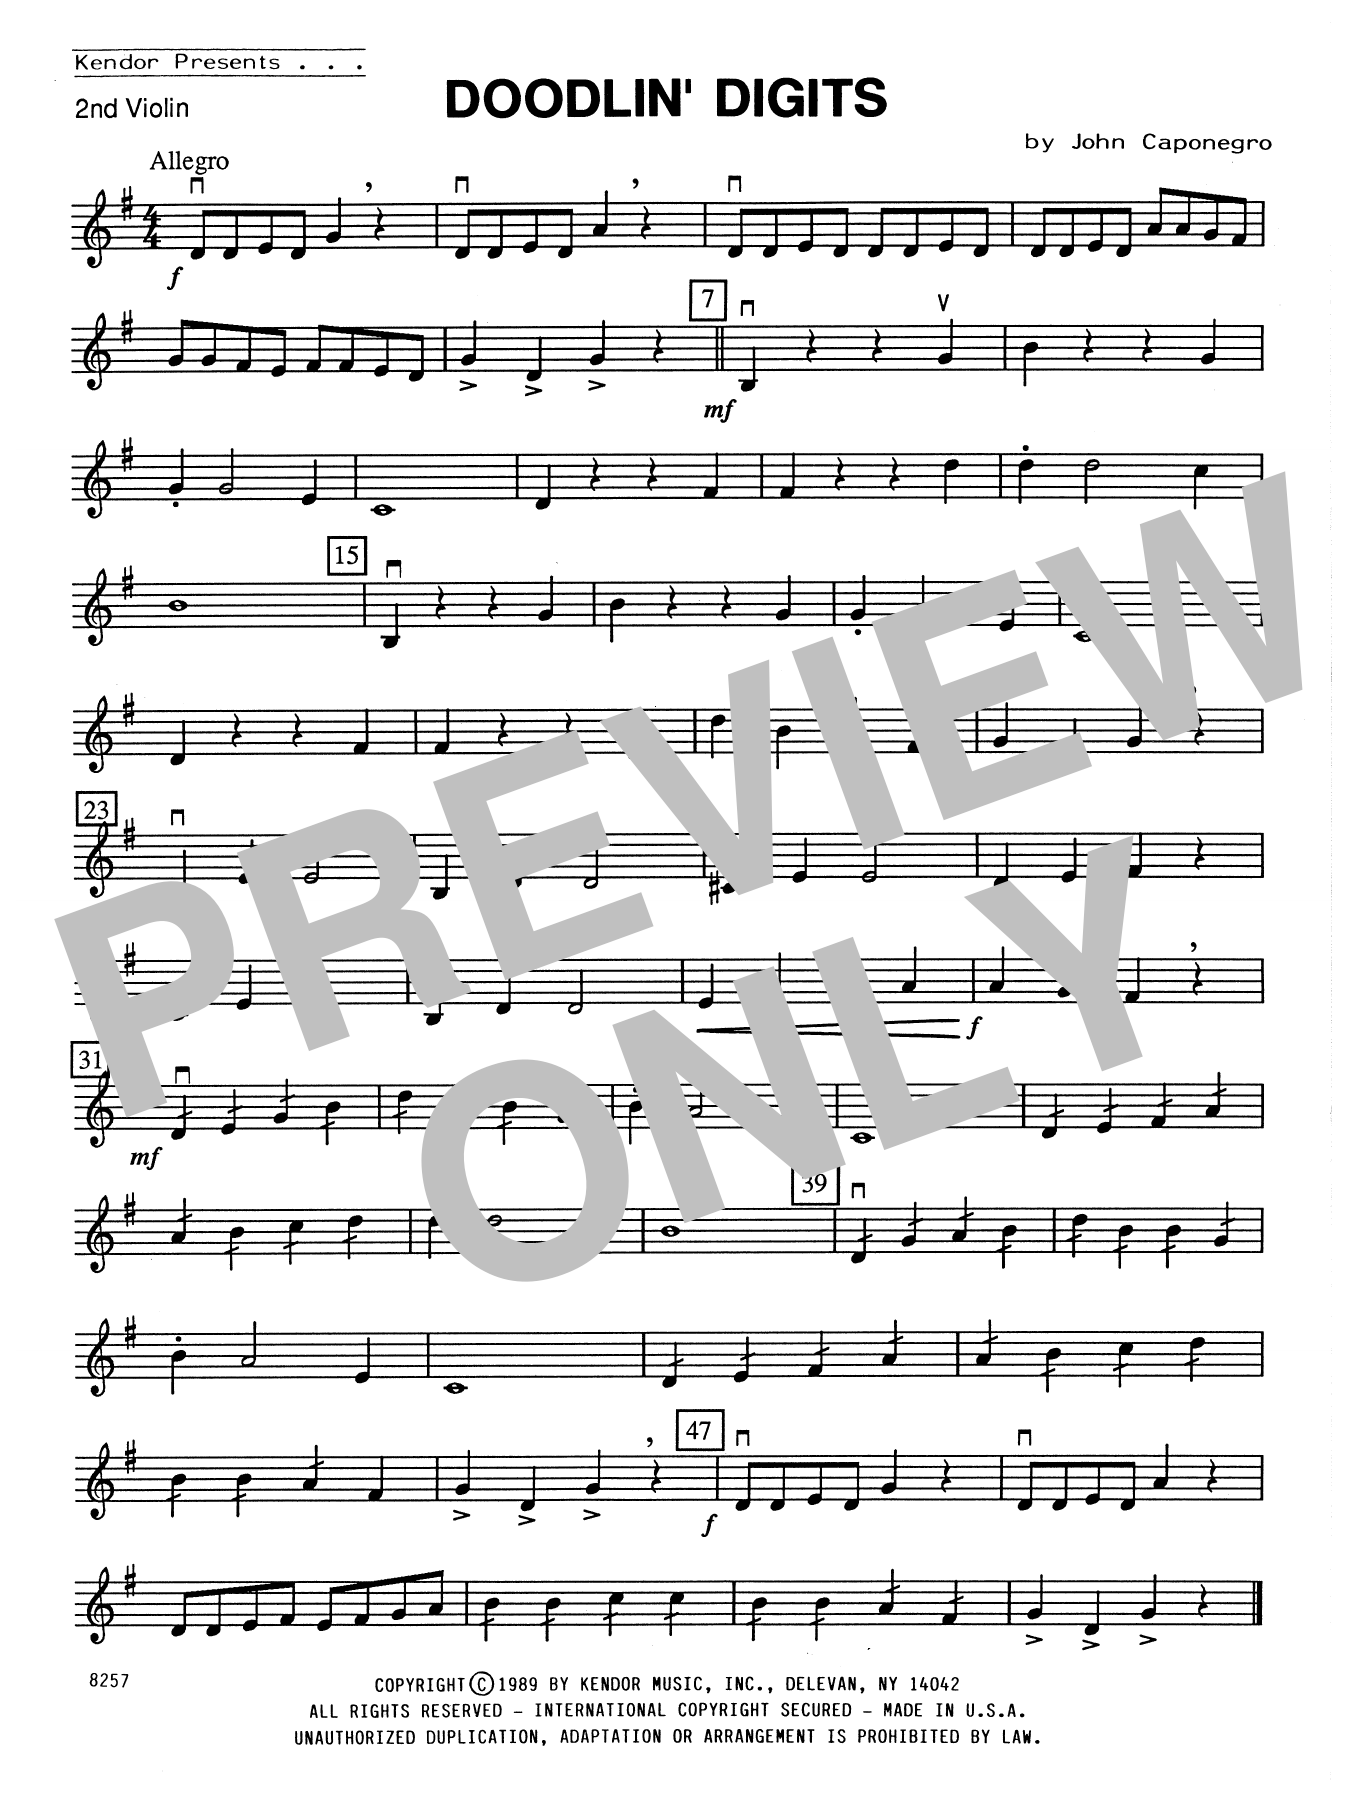 Download John Caponegro Doodlin' Digits - 2nd Violin Sheet Music